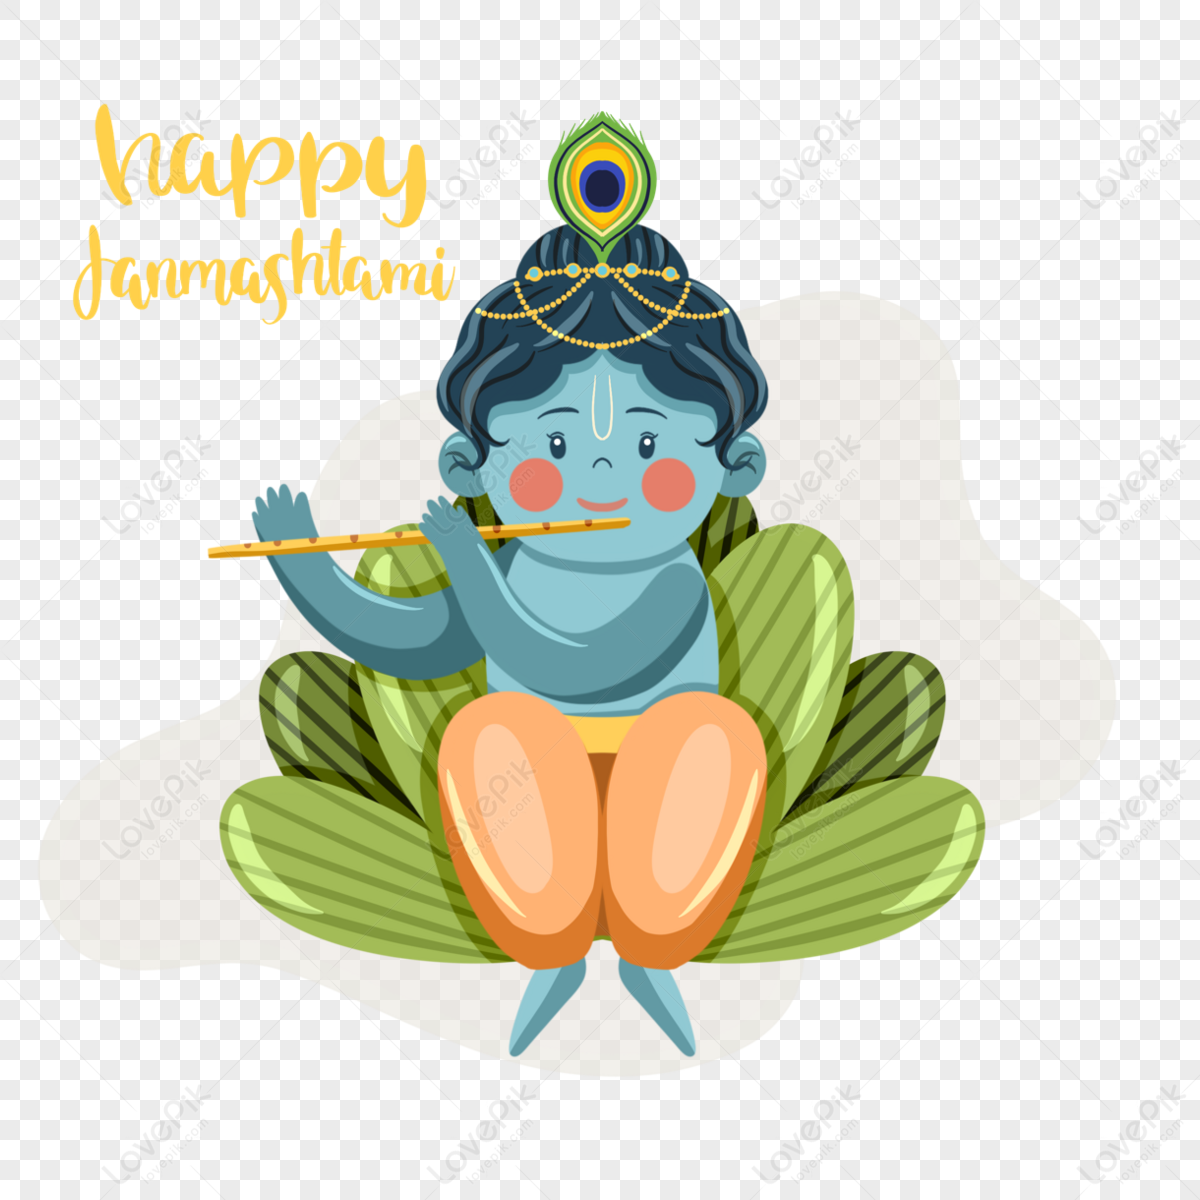 Download Hare Krishna Logo - Full Size PNG Image - PNGkit